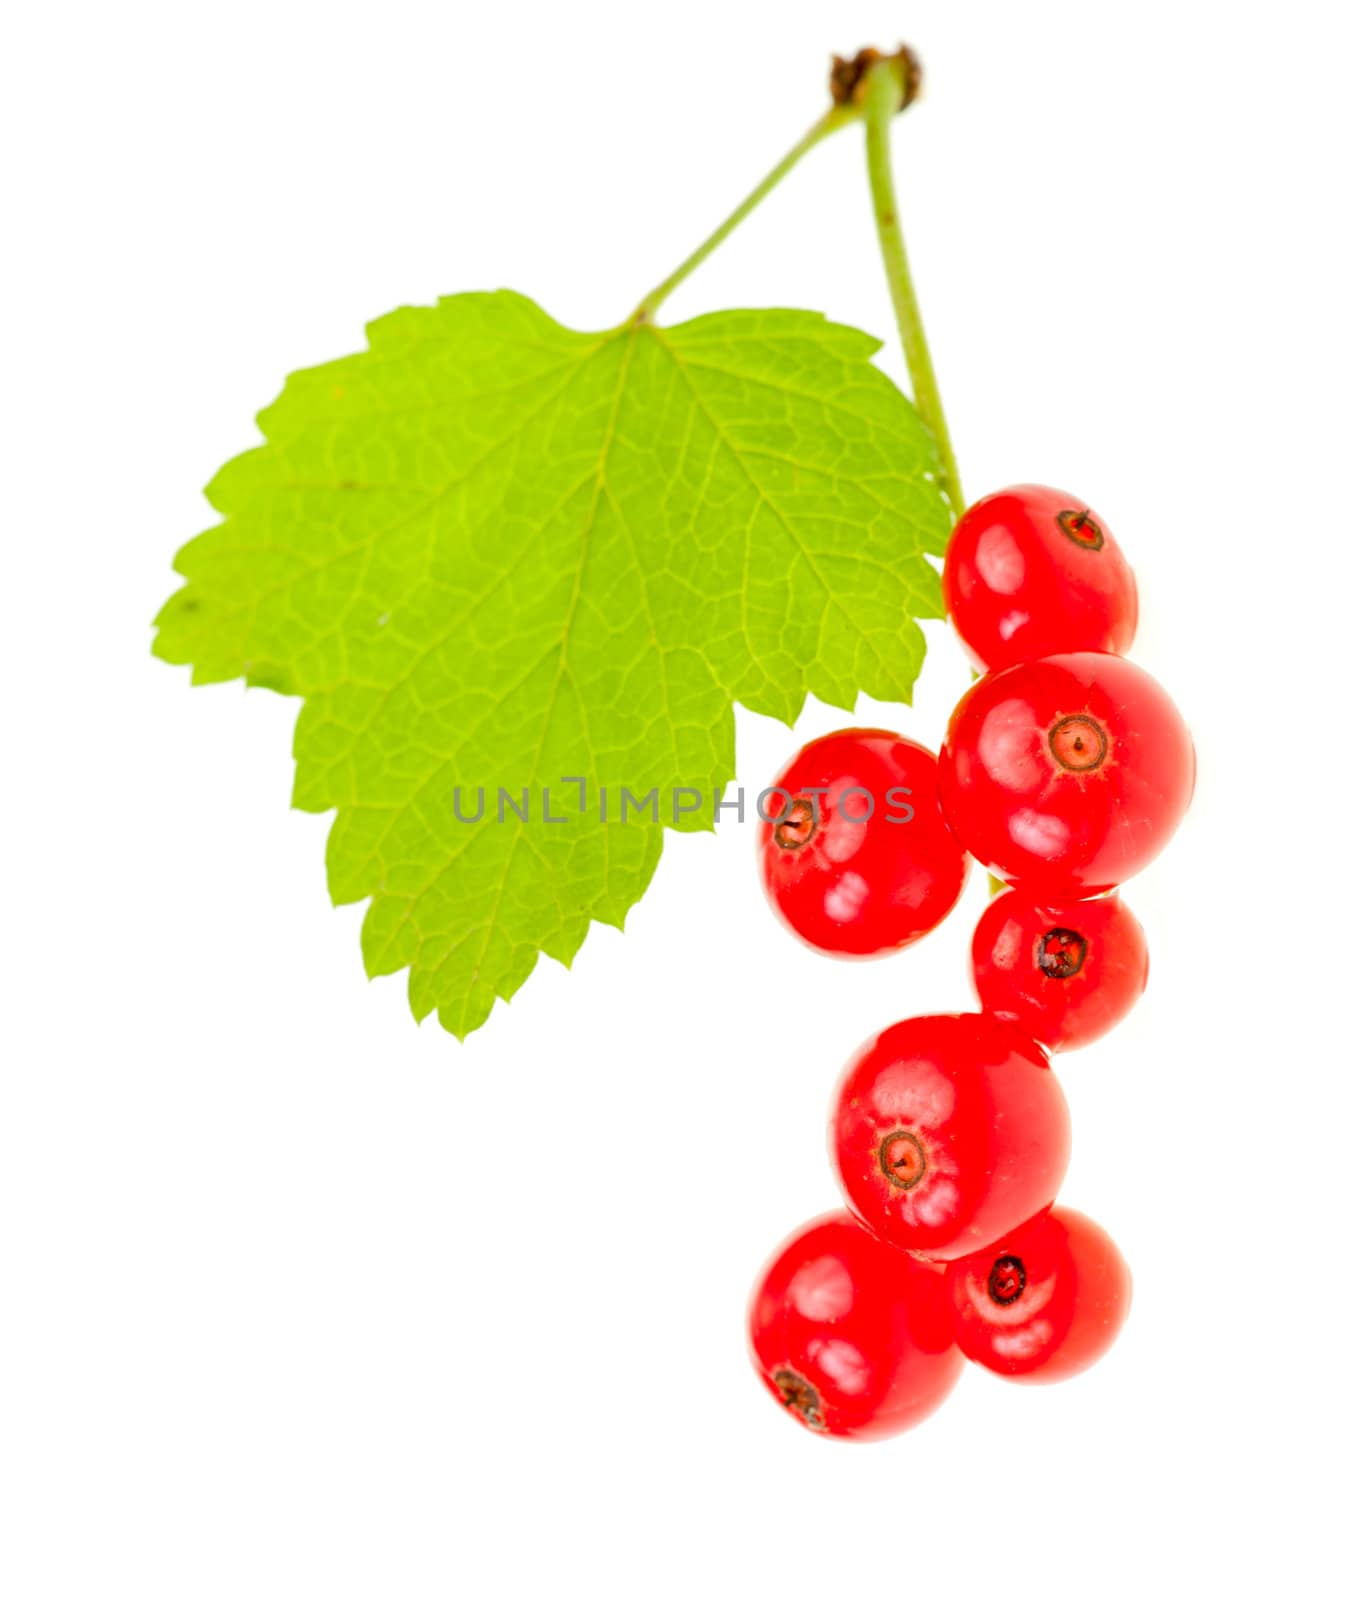 Redcurrant berries by naumoid